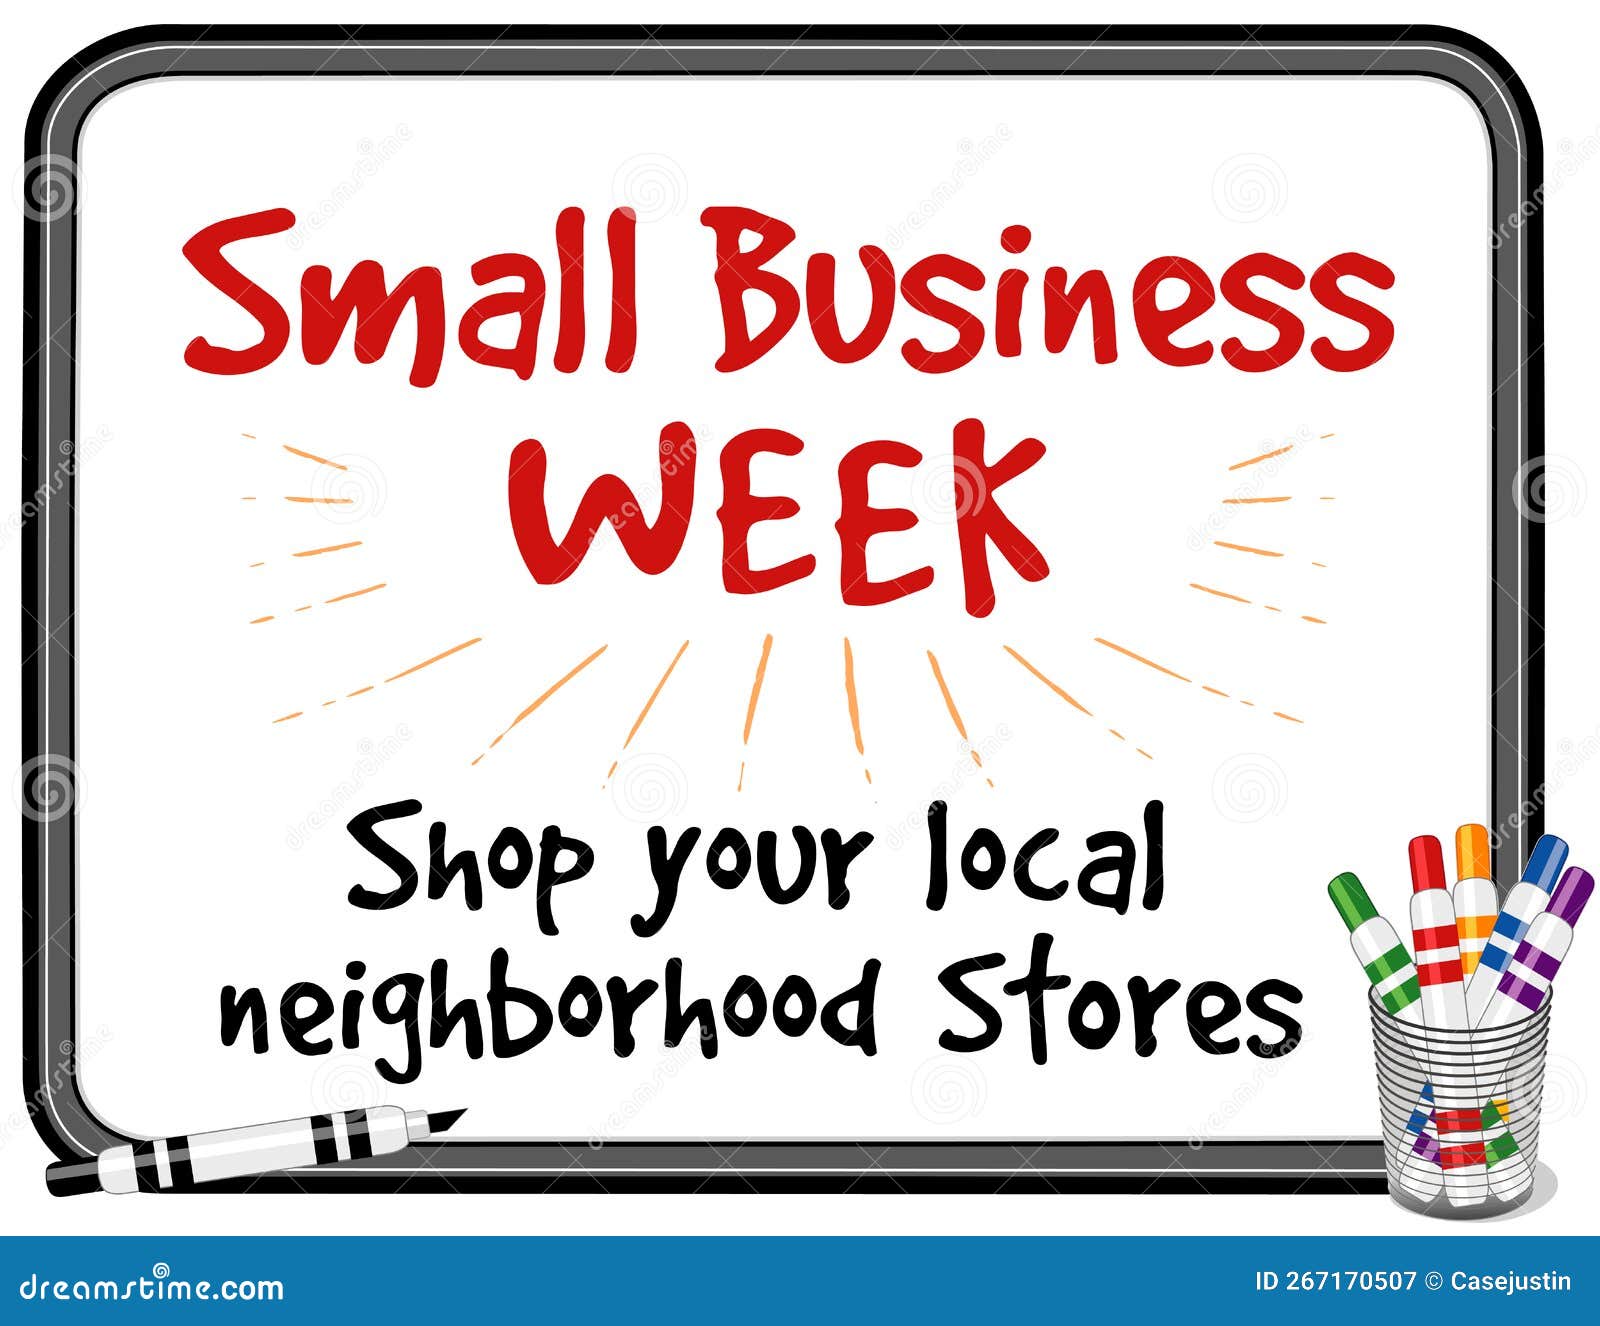 small business week, whiteboard sign, shop neighborhood stores